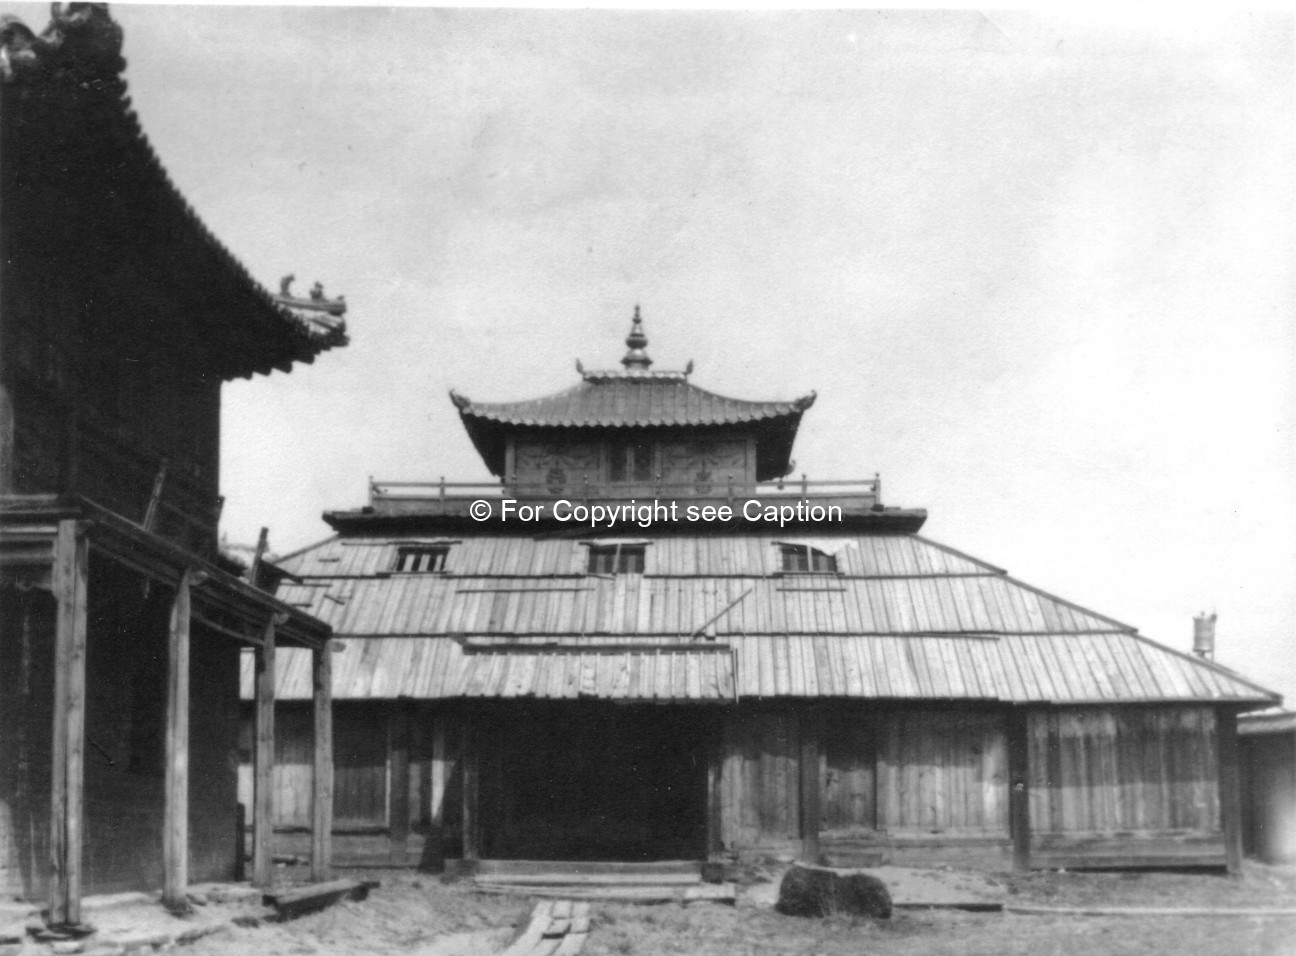 Gandantegchenlin temple and Didinpovran. Source unknown.